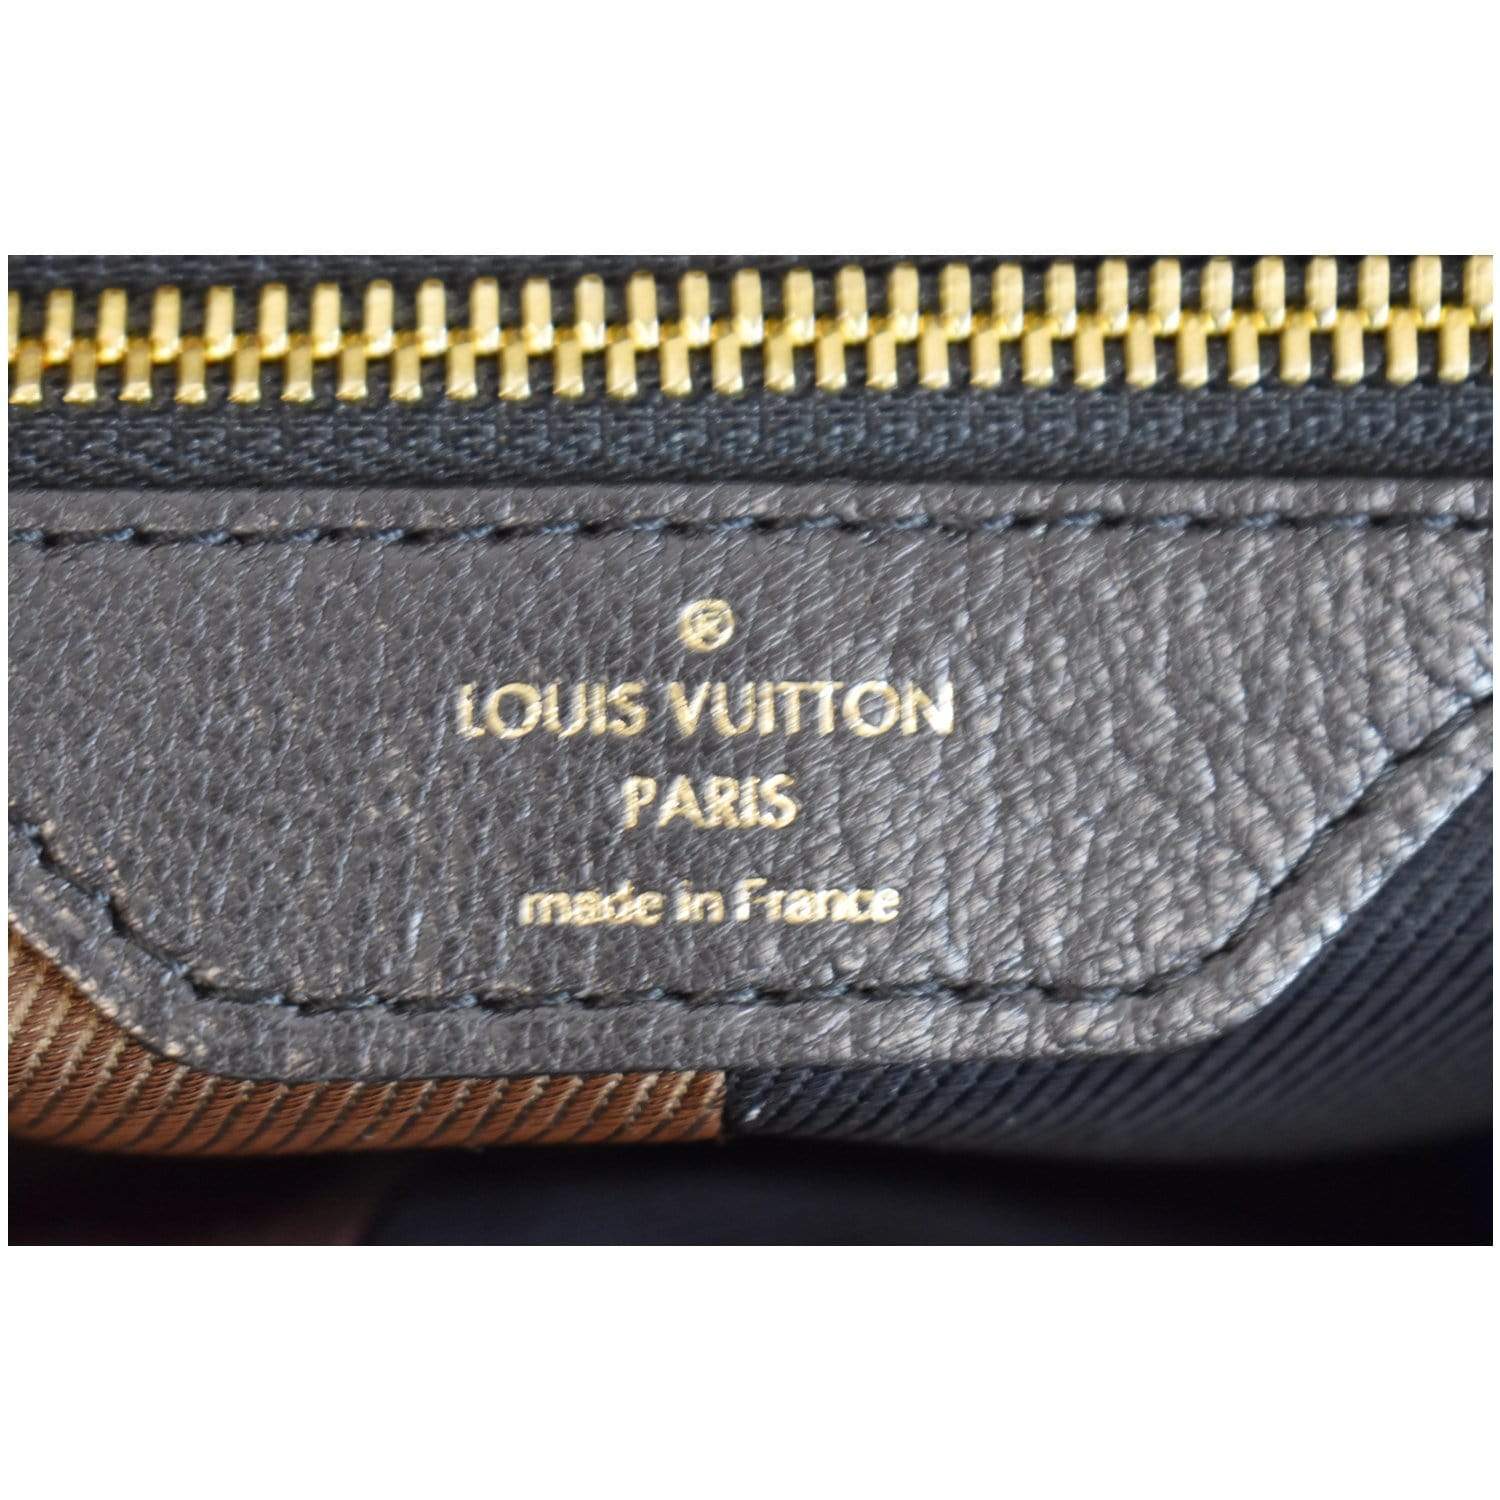 Louis Vuitton Monogram Medium Block Tricolor Stripes - THE PURSE